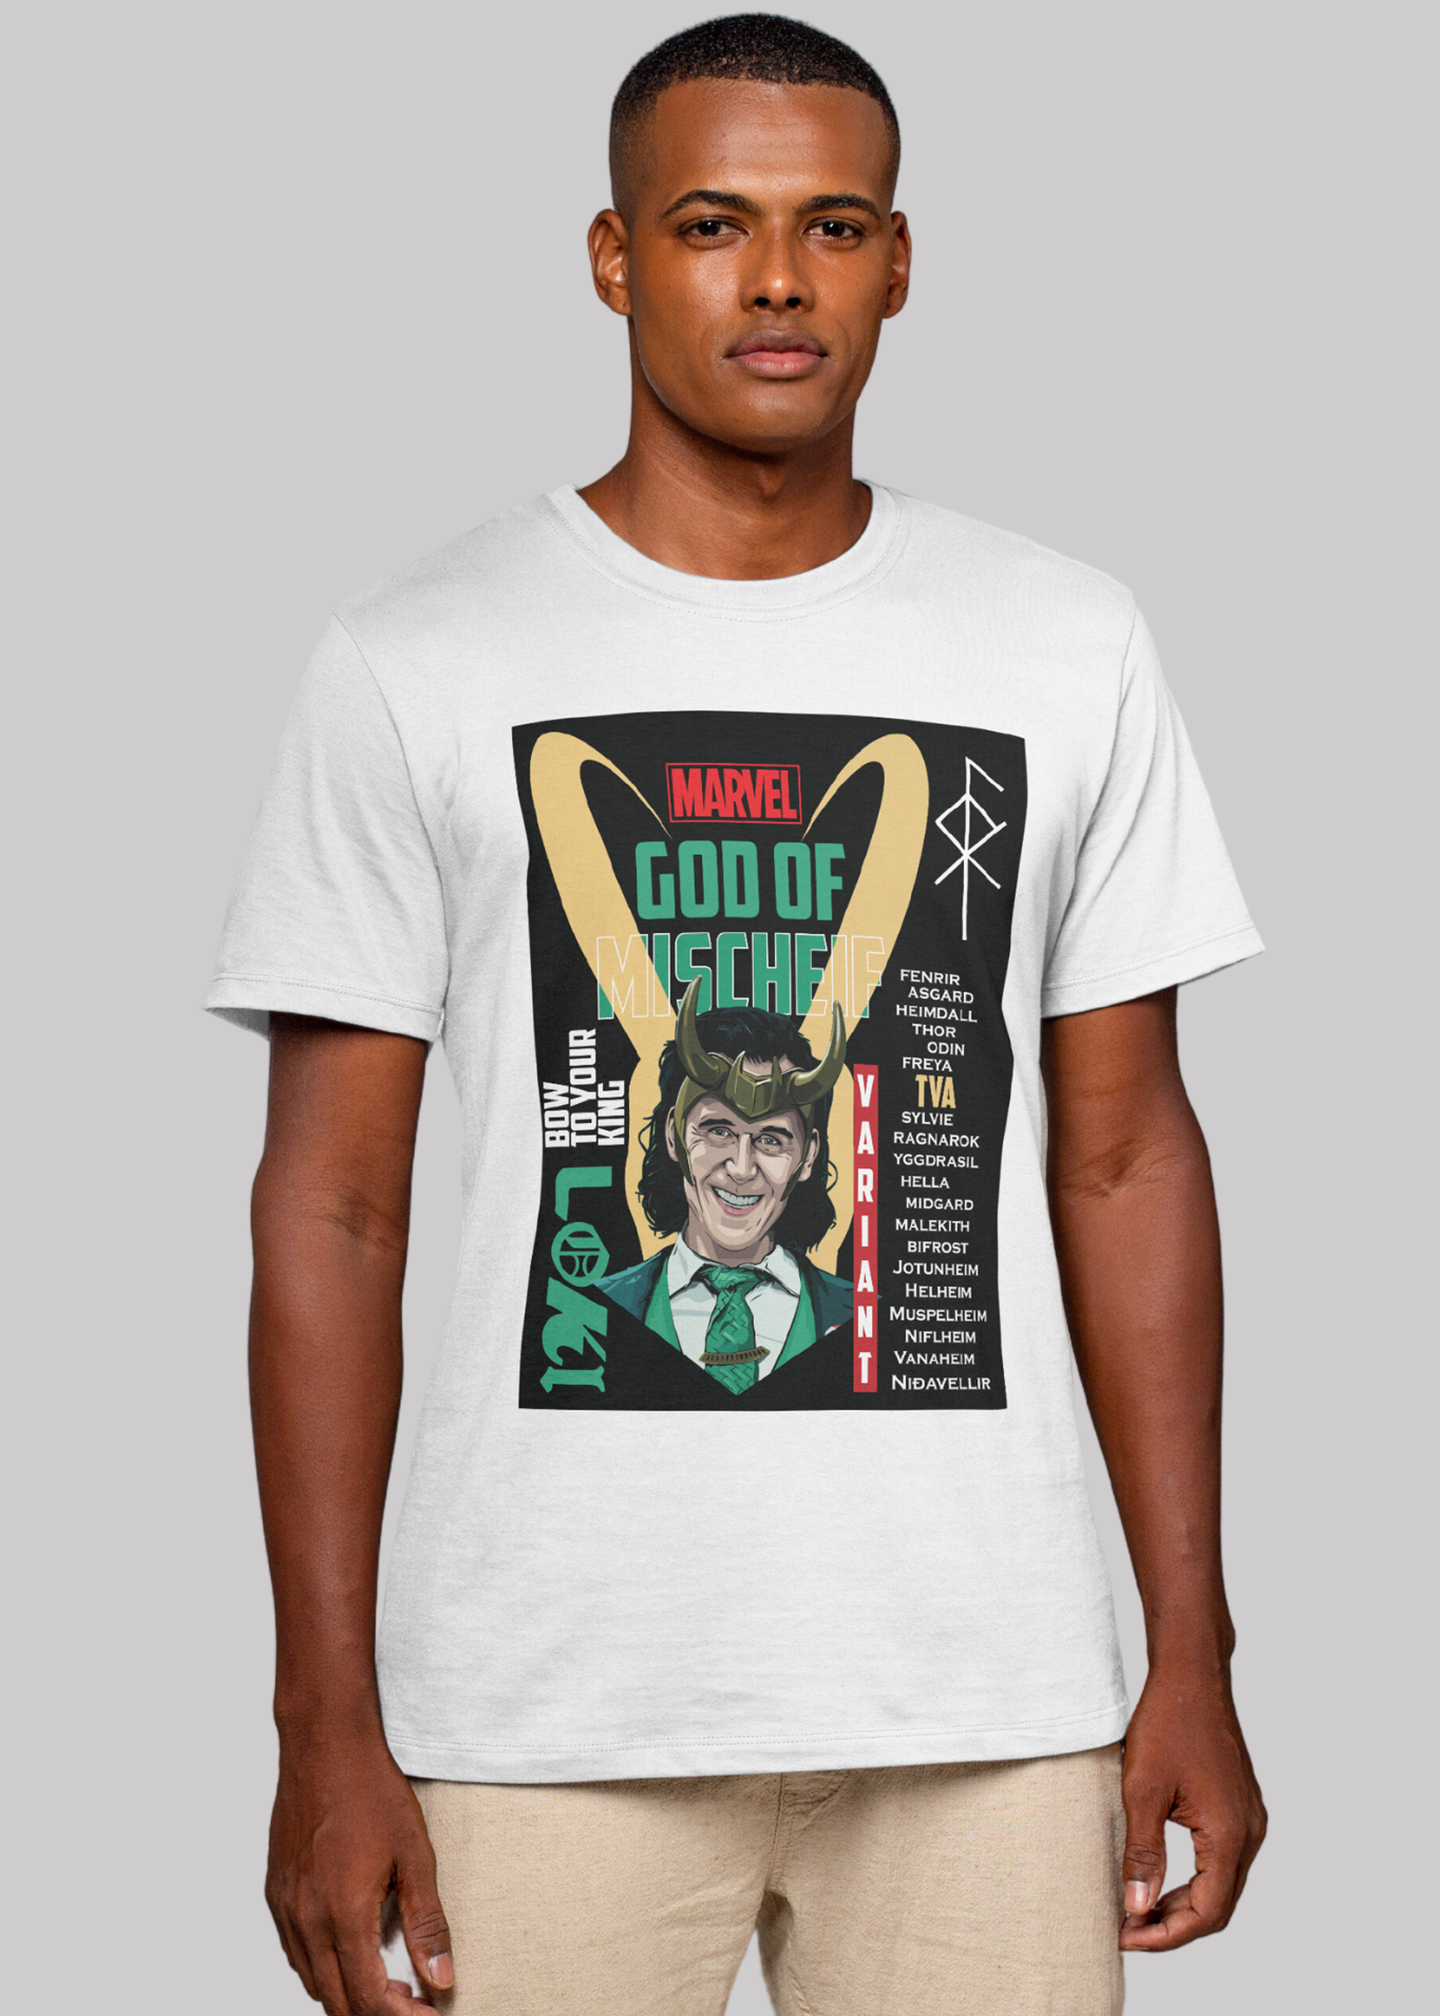 Loki Printed Half Sleeve Premium Cotton T-shirt For Men